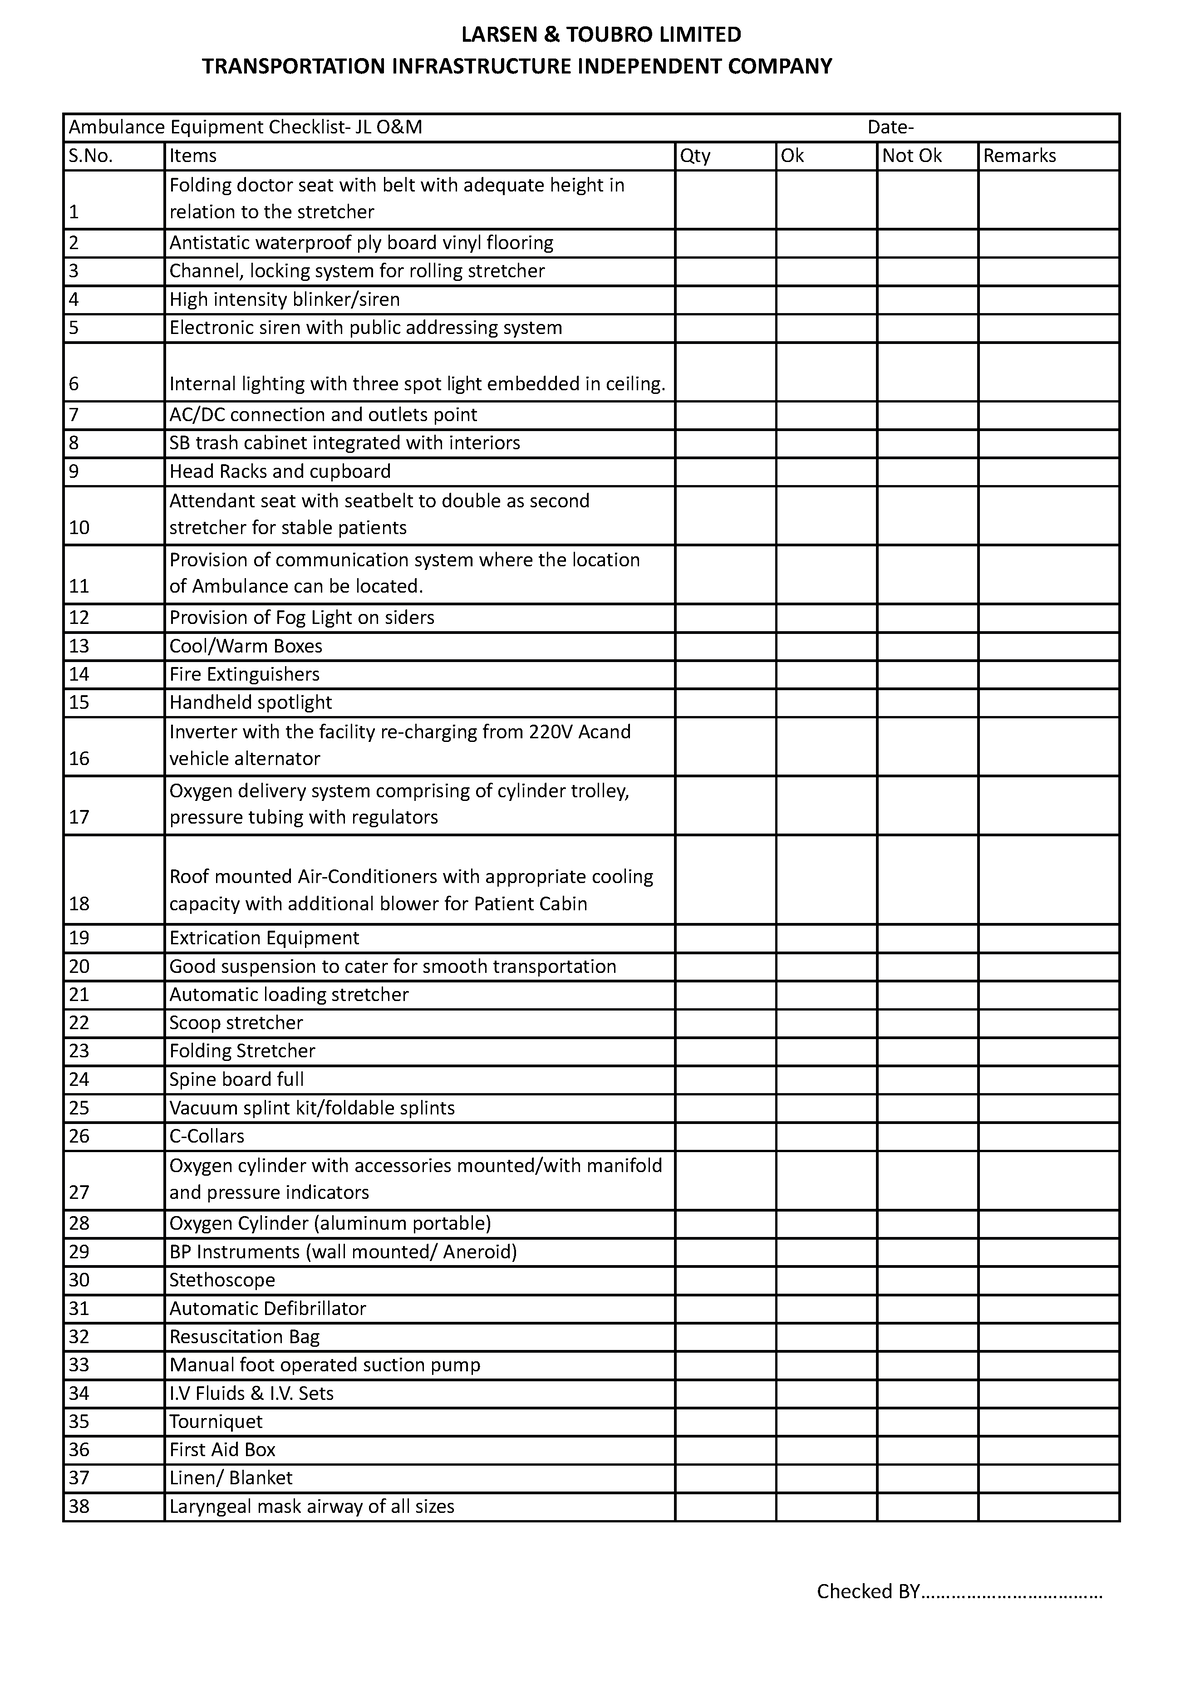 Ambulance Checklist PDF PKG2 - LARSEN & TOUBRO LIMITED TRANSPORTATION ...